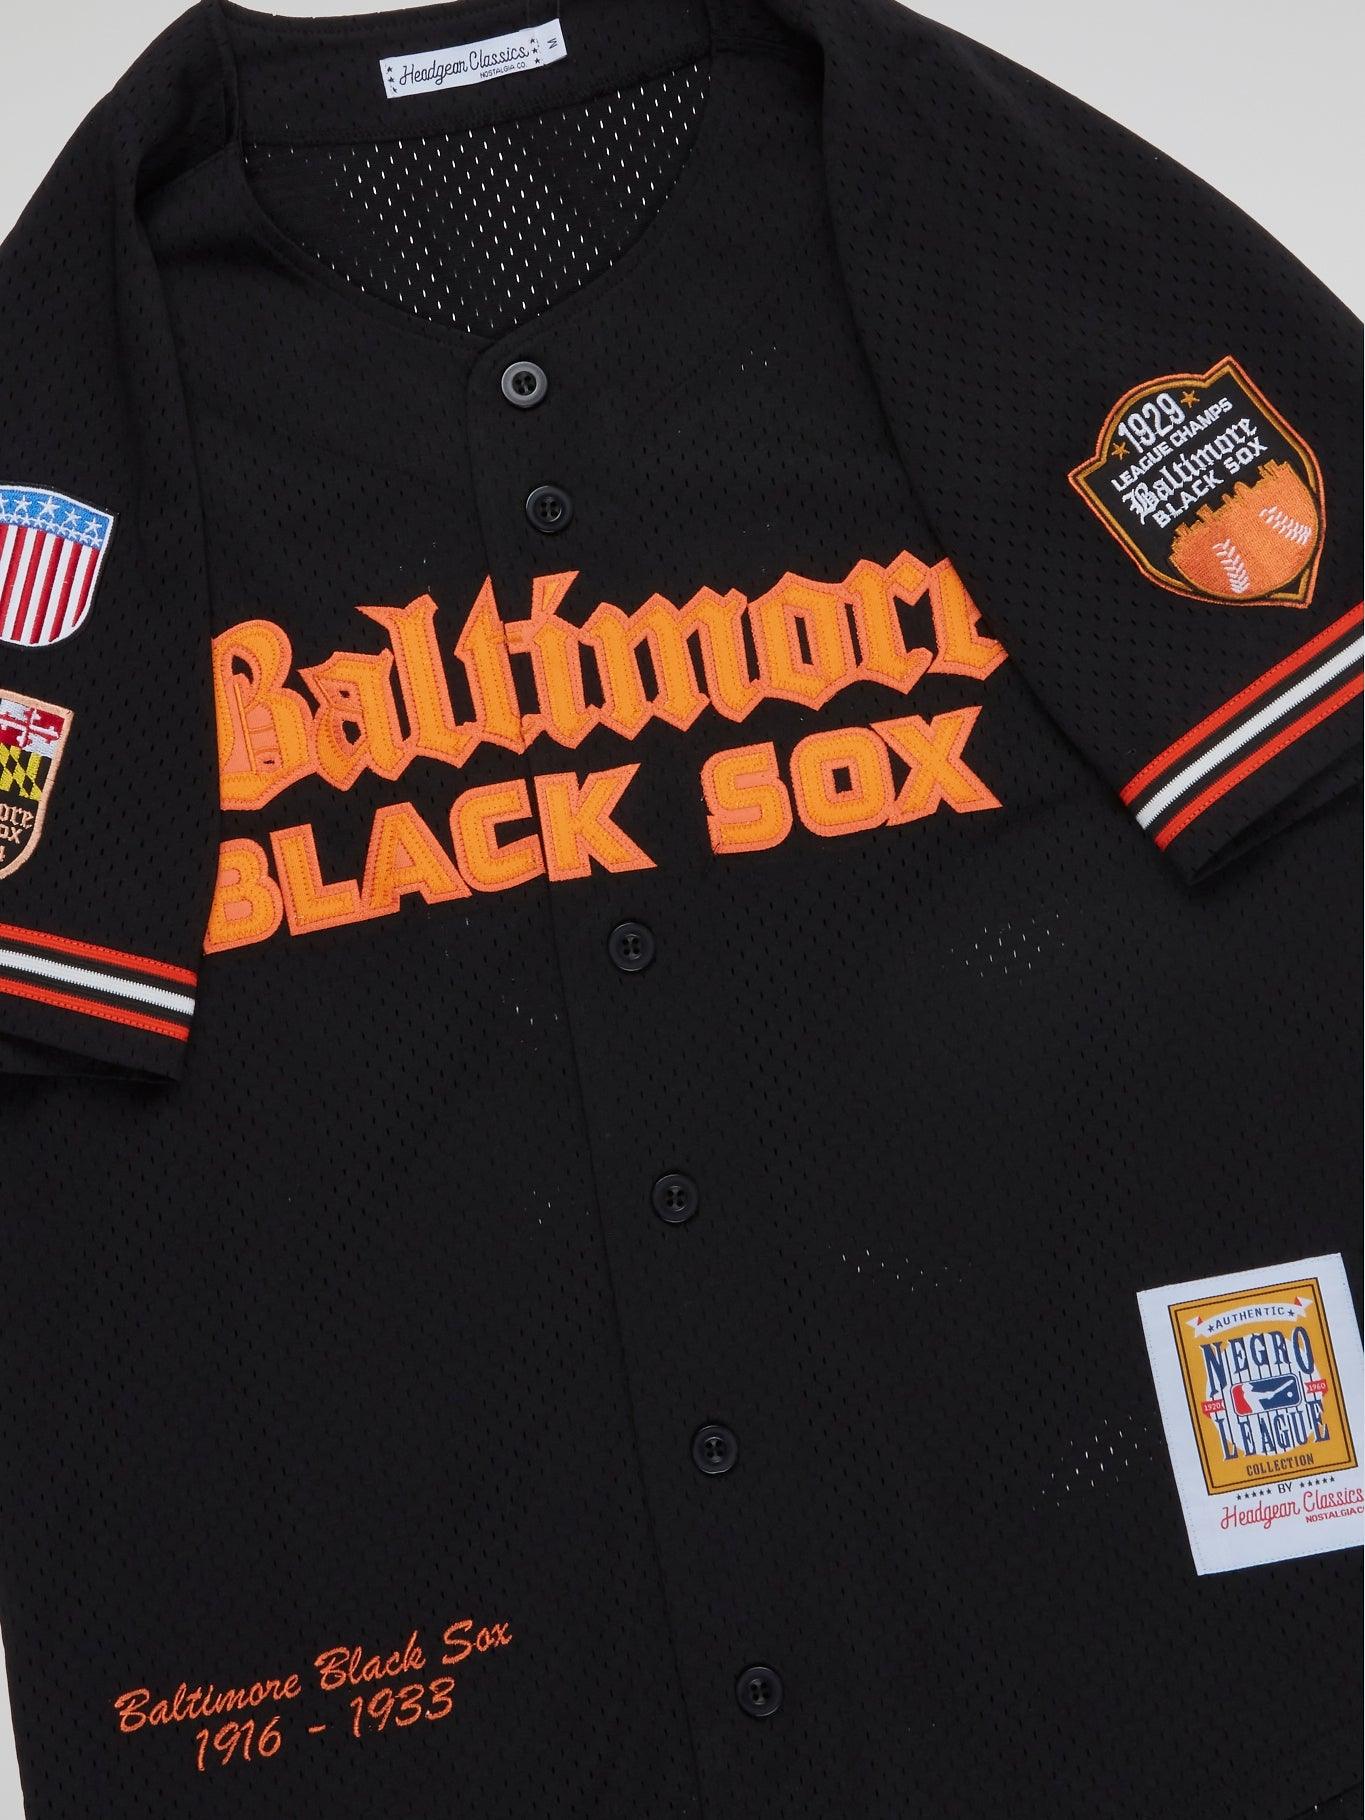 Baltimore Black Sox Button Down Jersey Black - B-Hype Society